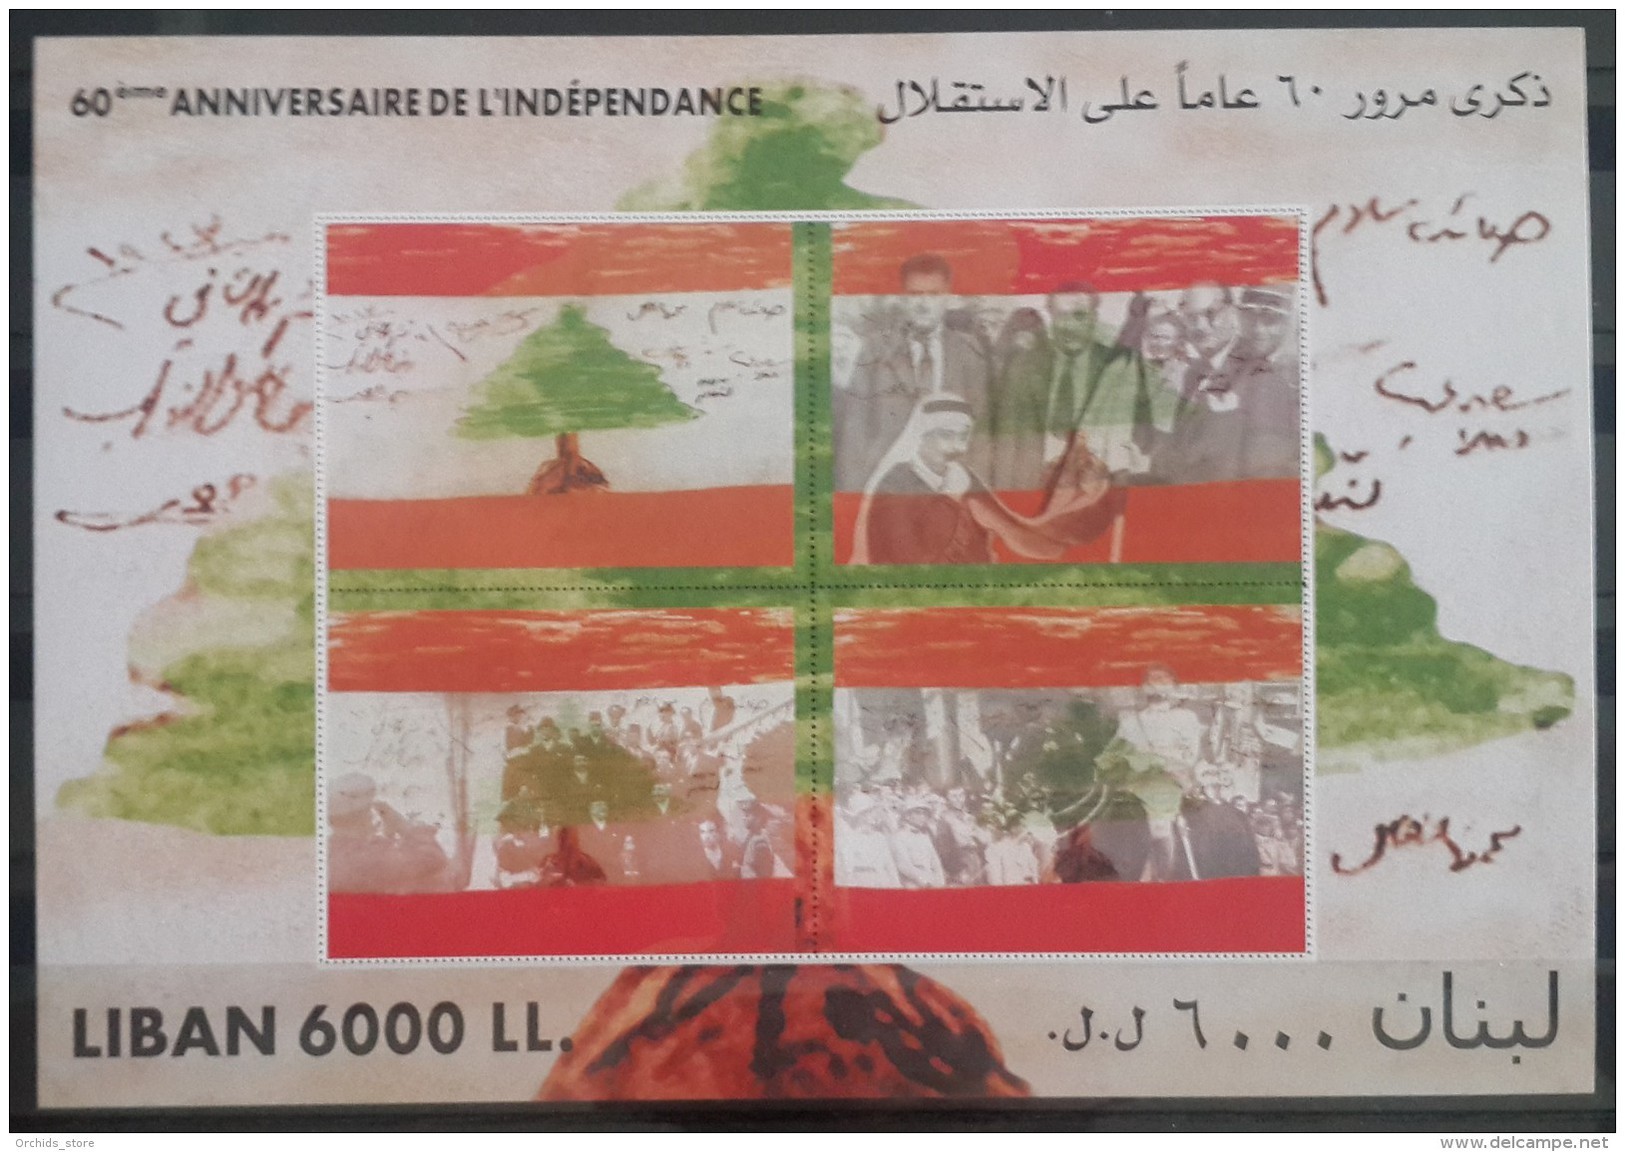 Lebanon 2003 Mi. Block 47 MNH Souvenir Sheet S/S - Independence Day - Flag - Revolution - Lebanon